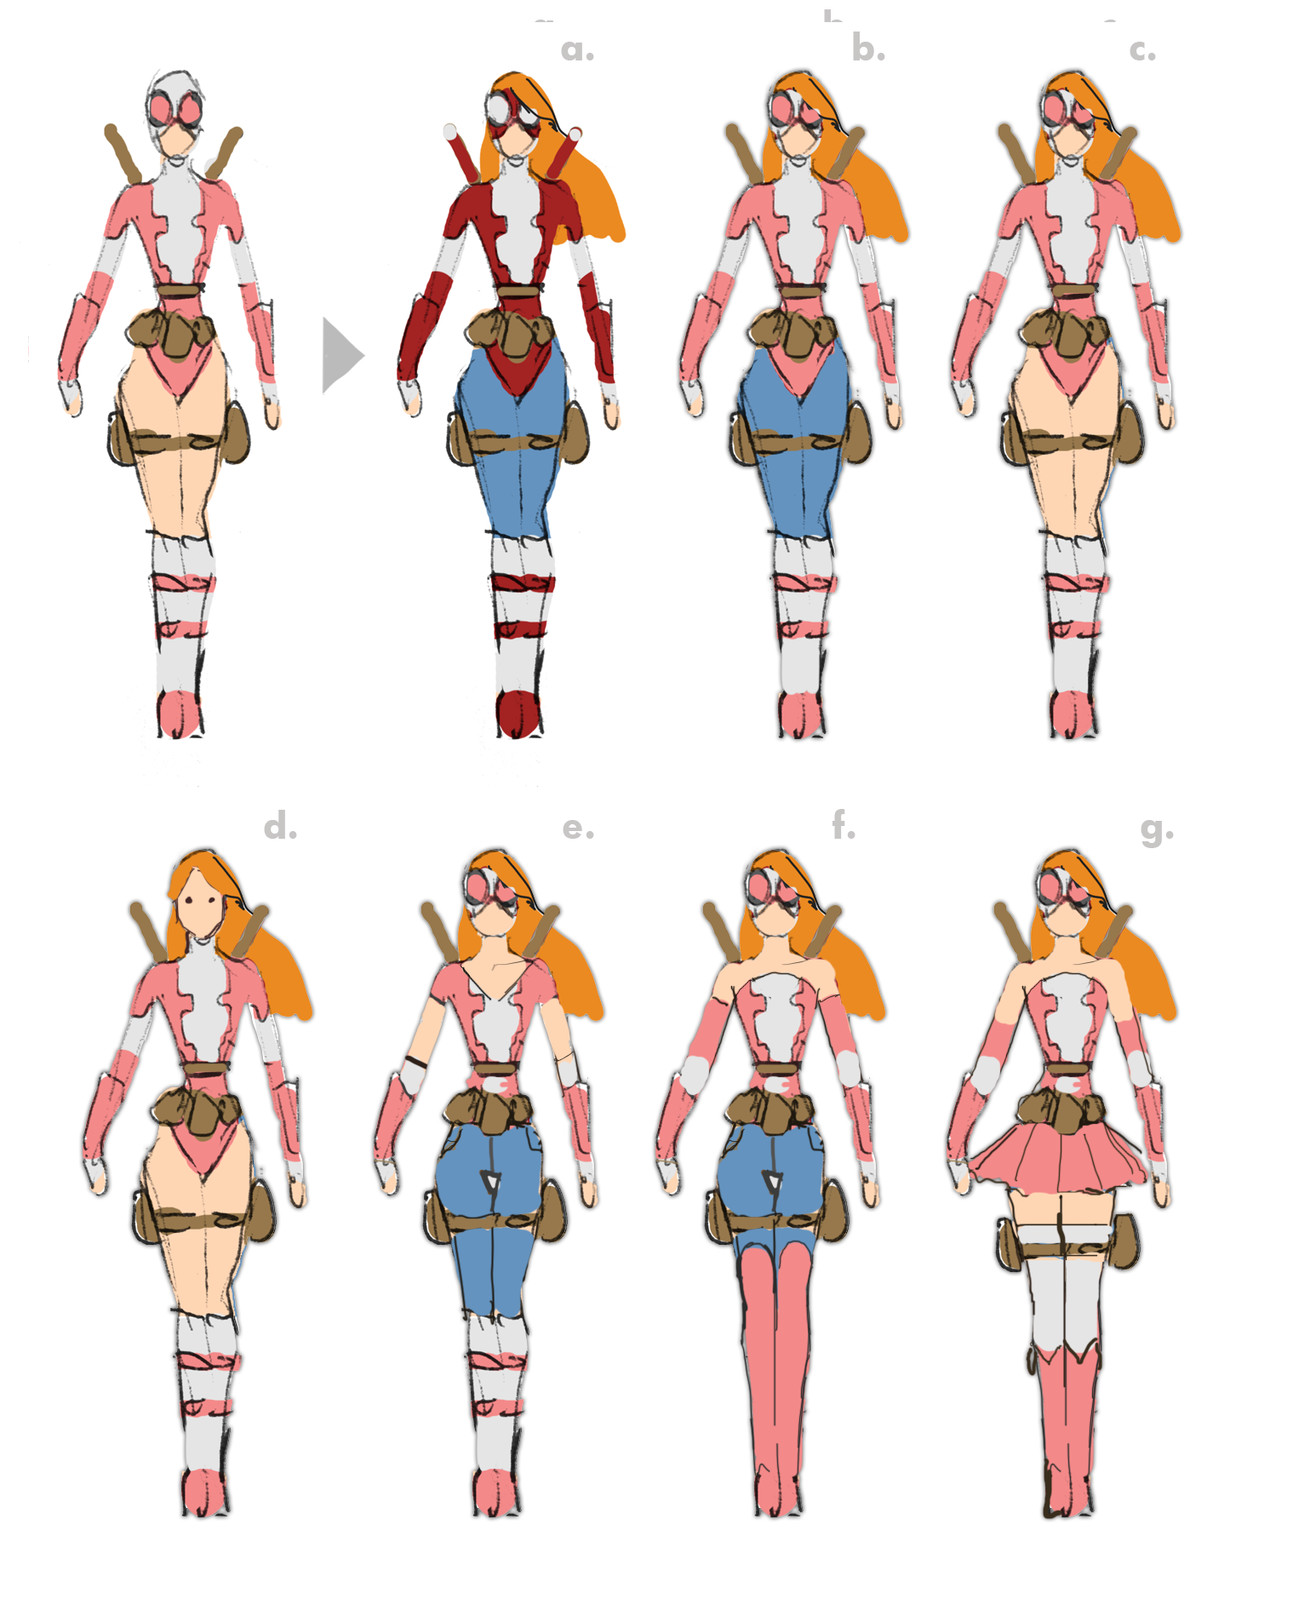 Quick concept sketches for MJPool's mash-up uniform.